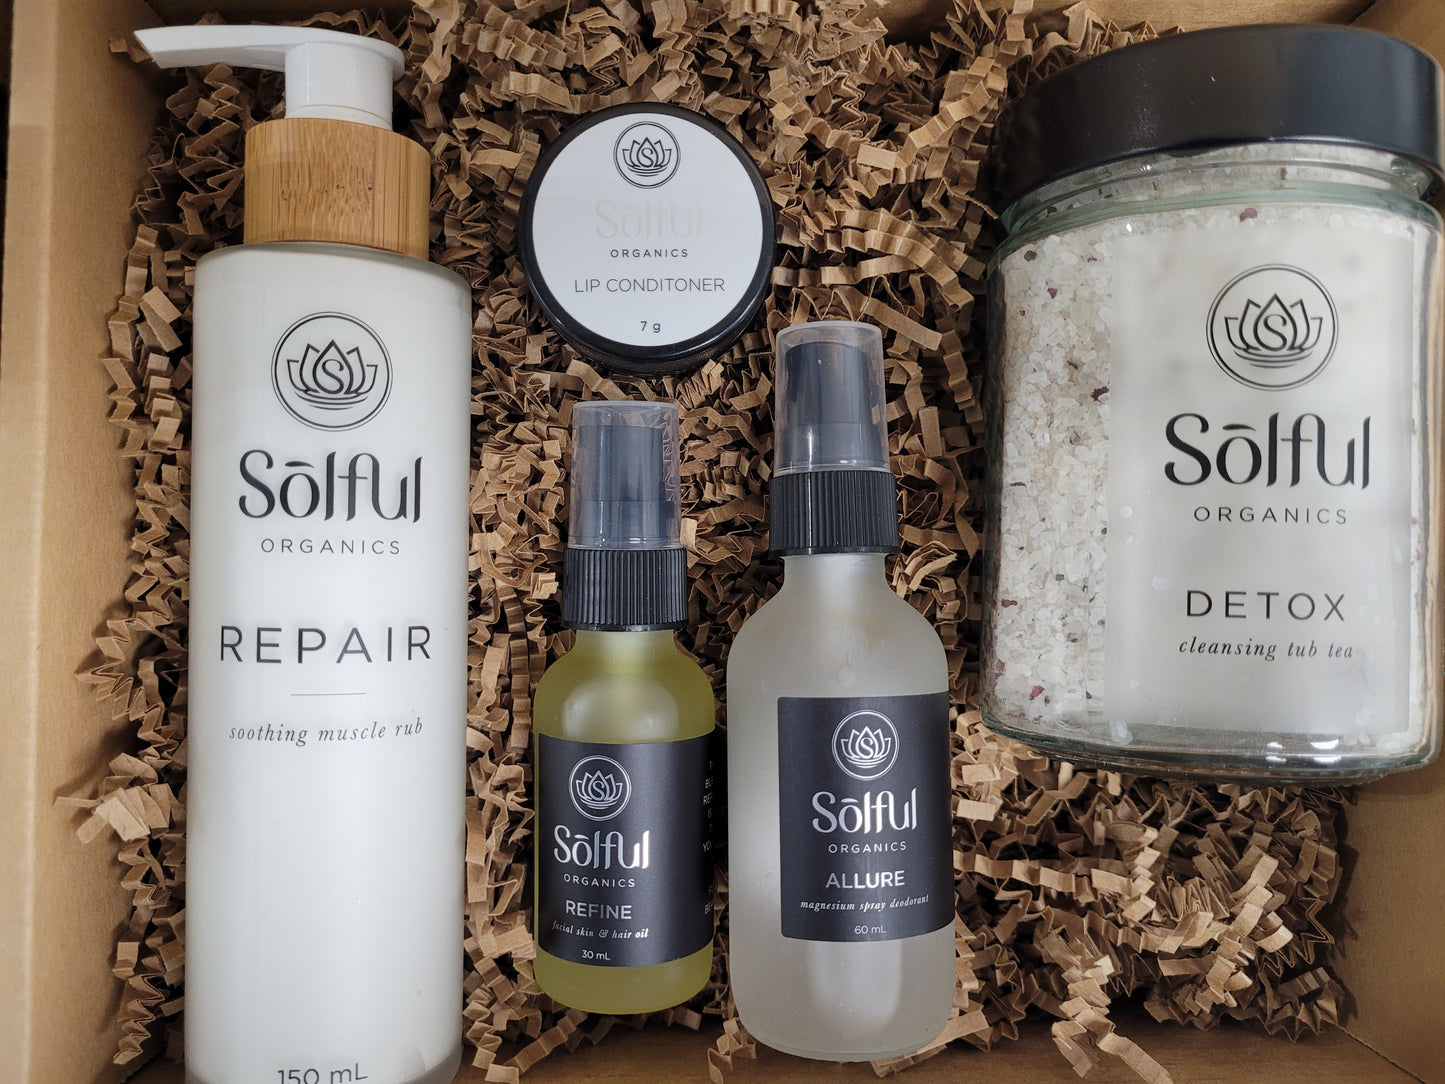 Solful Organics Box Set - The Maintained Man Box - includes small detox tub tea, repair, lip conditioner, allure, and refine